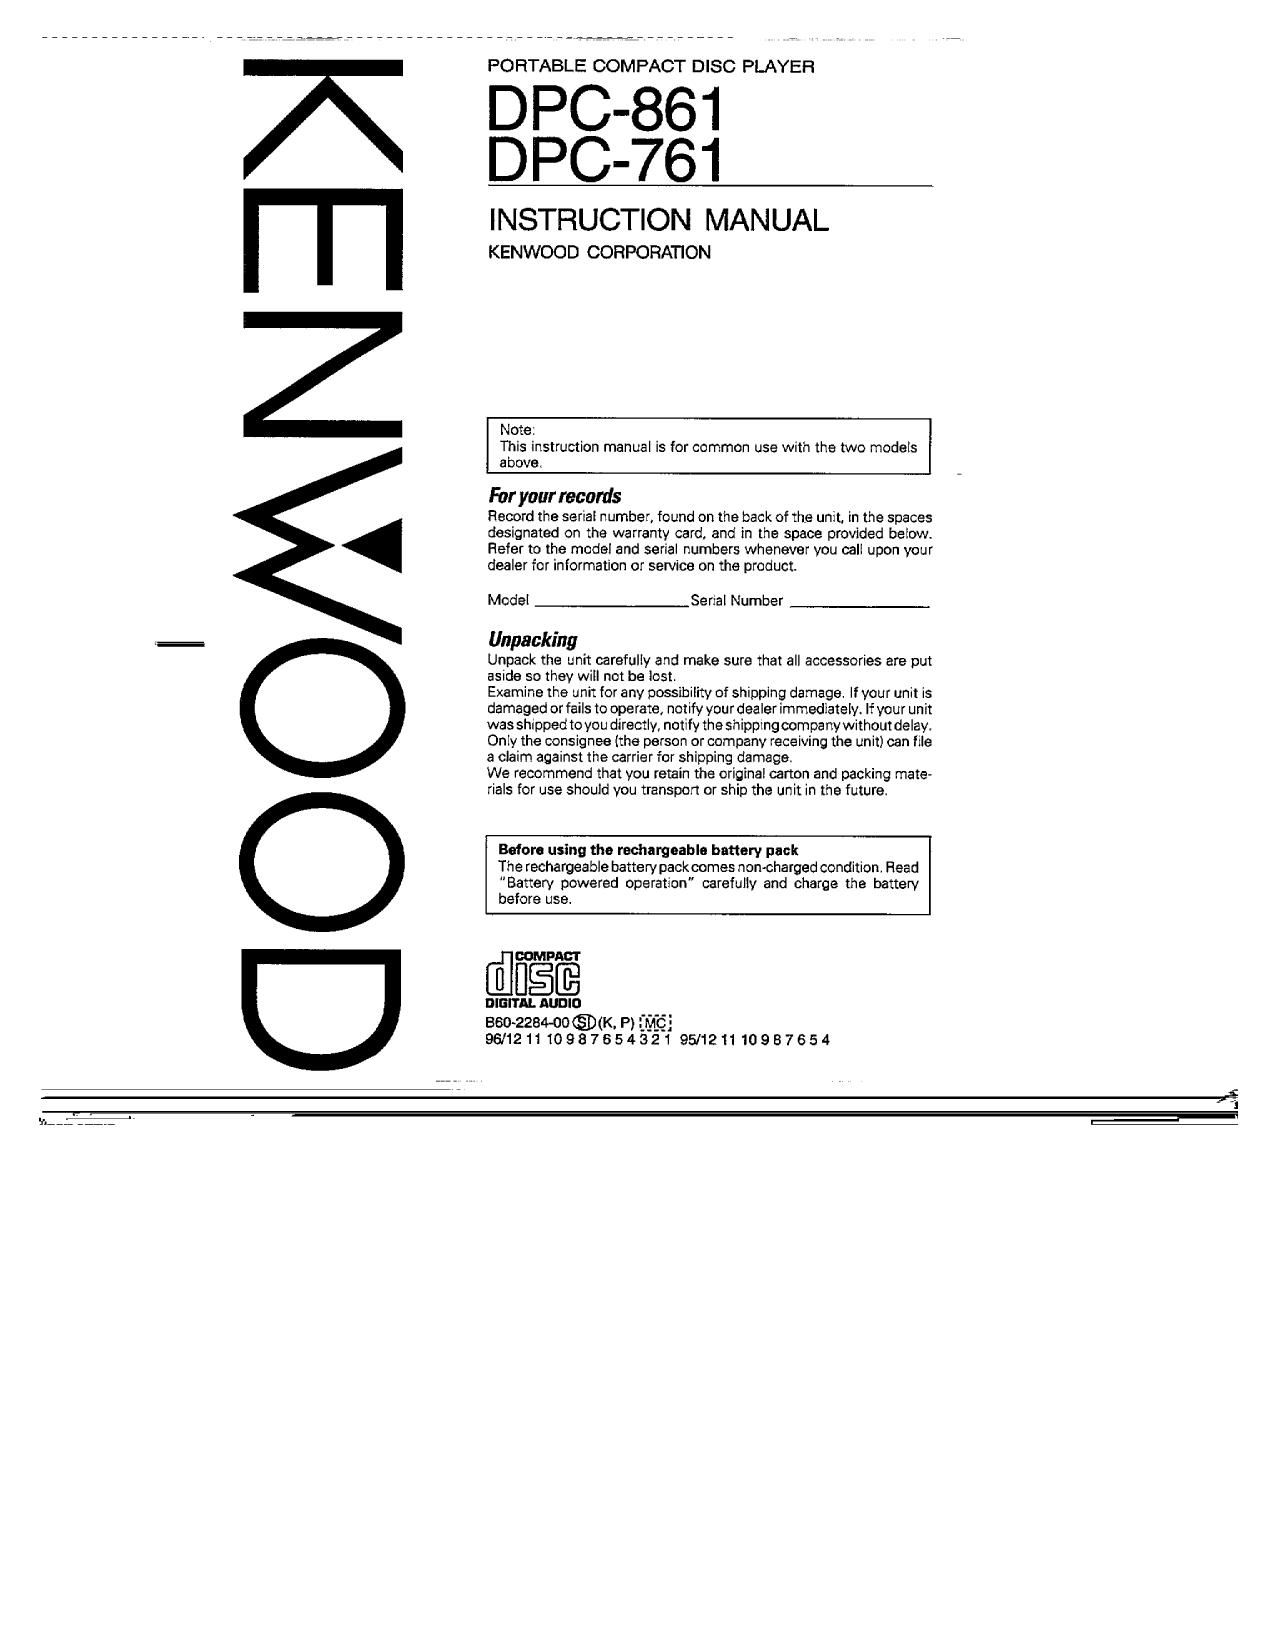 Kenwood DPC 861 Owners Manual